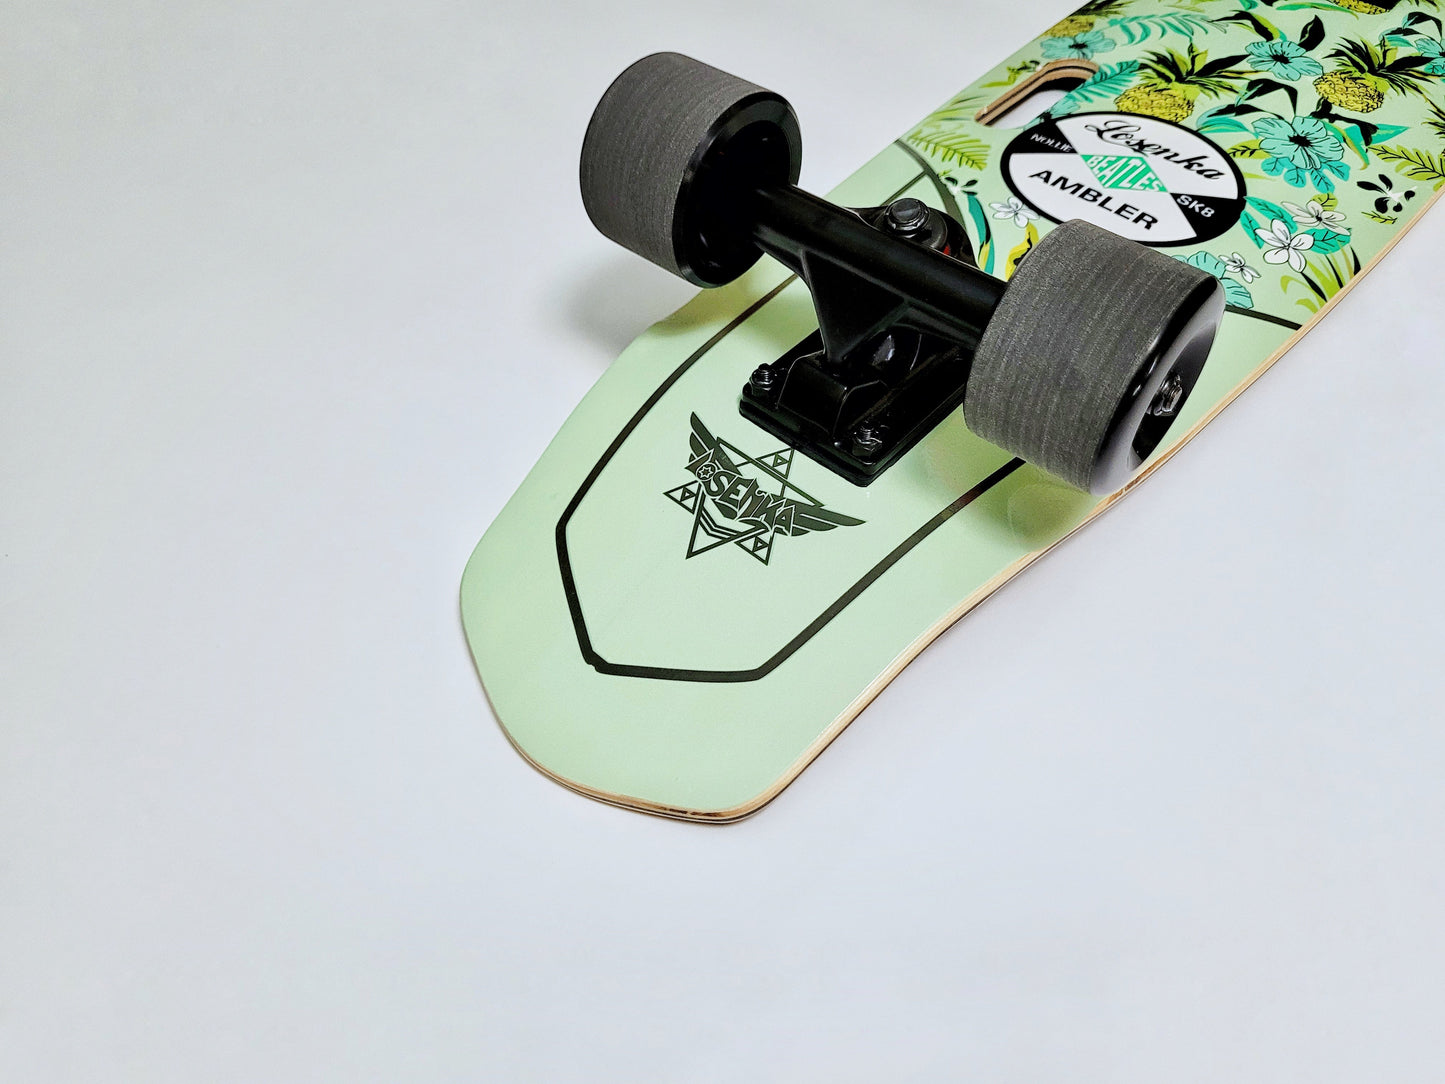 Ambler Green Cruiser board - SkatebruhSG